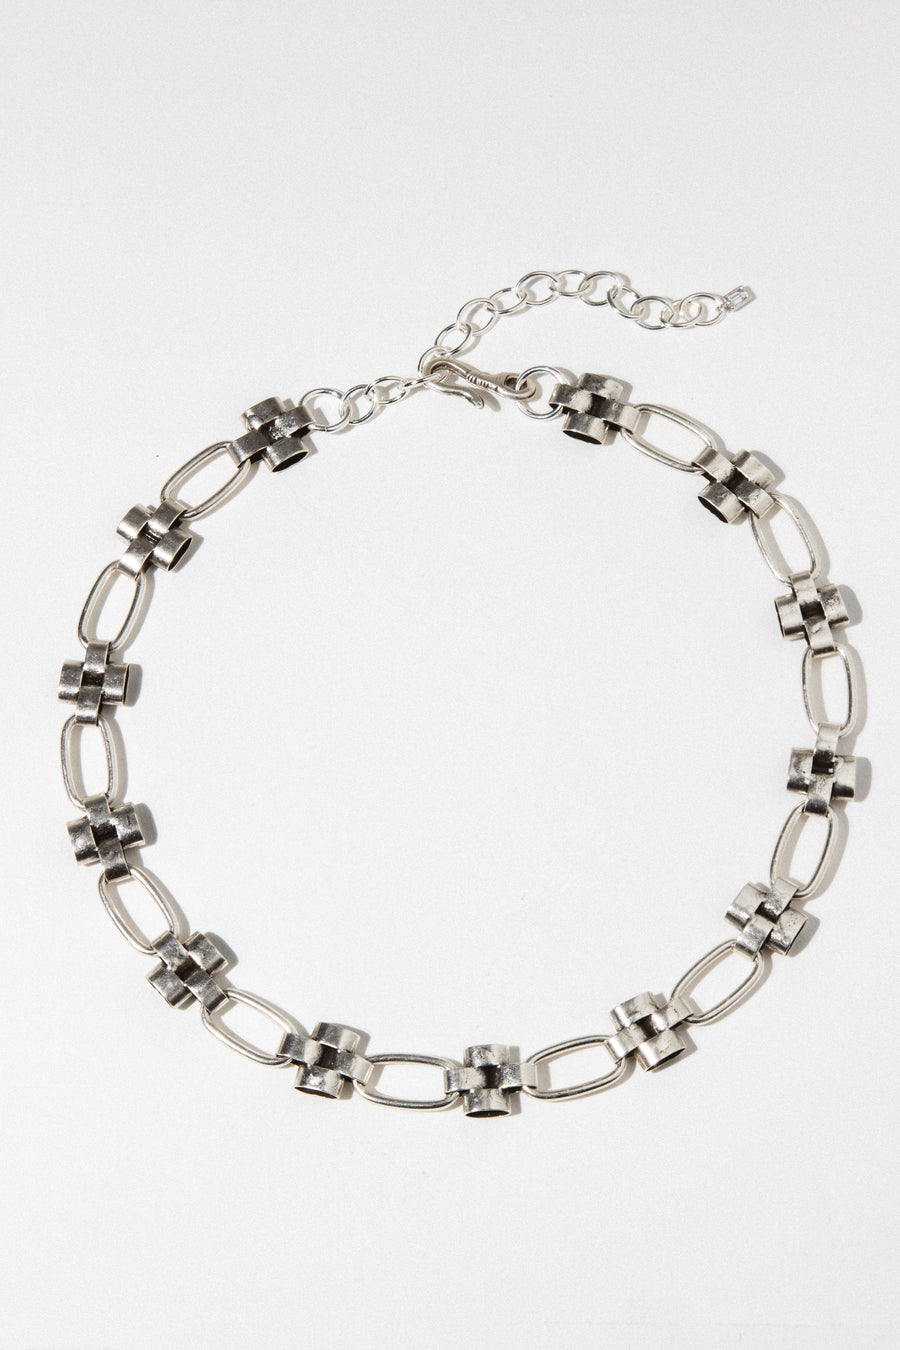 Goddess Jewelry Silver / 14 Inches Maria Chain Choker